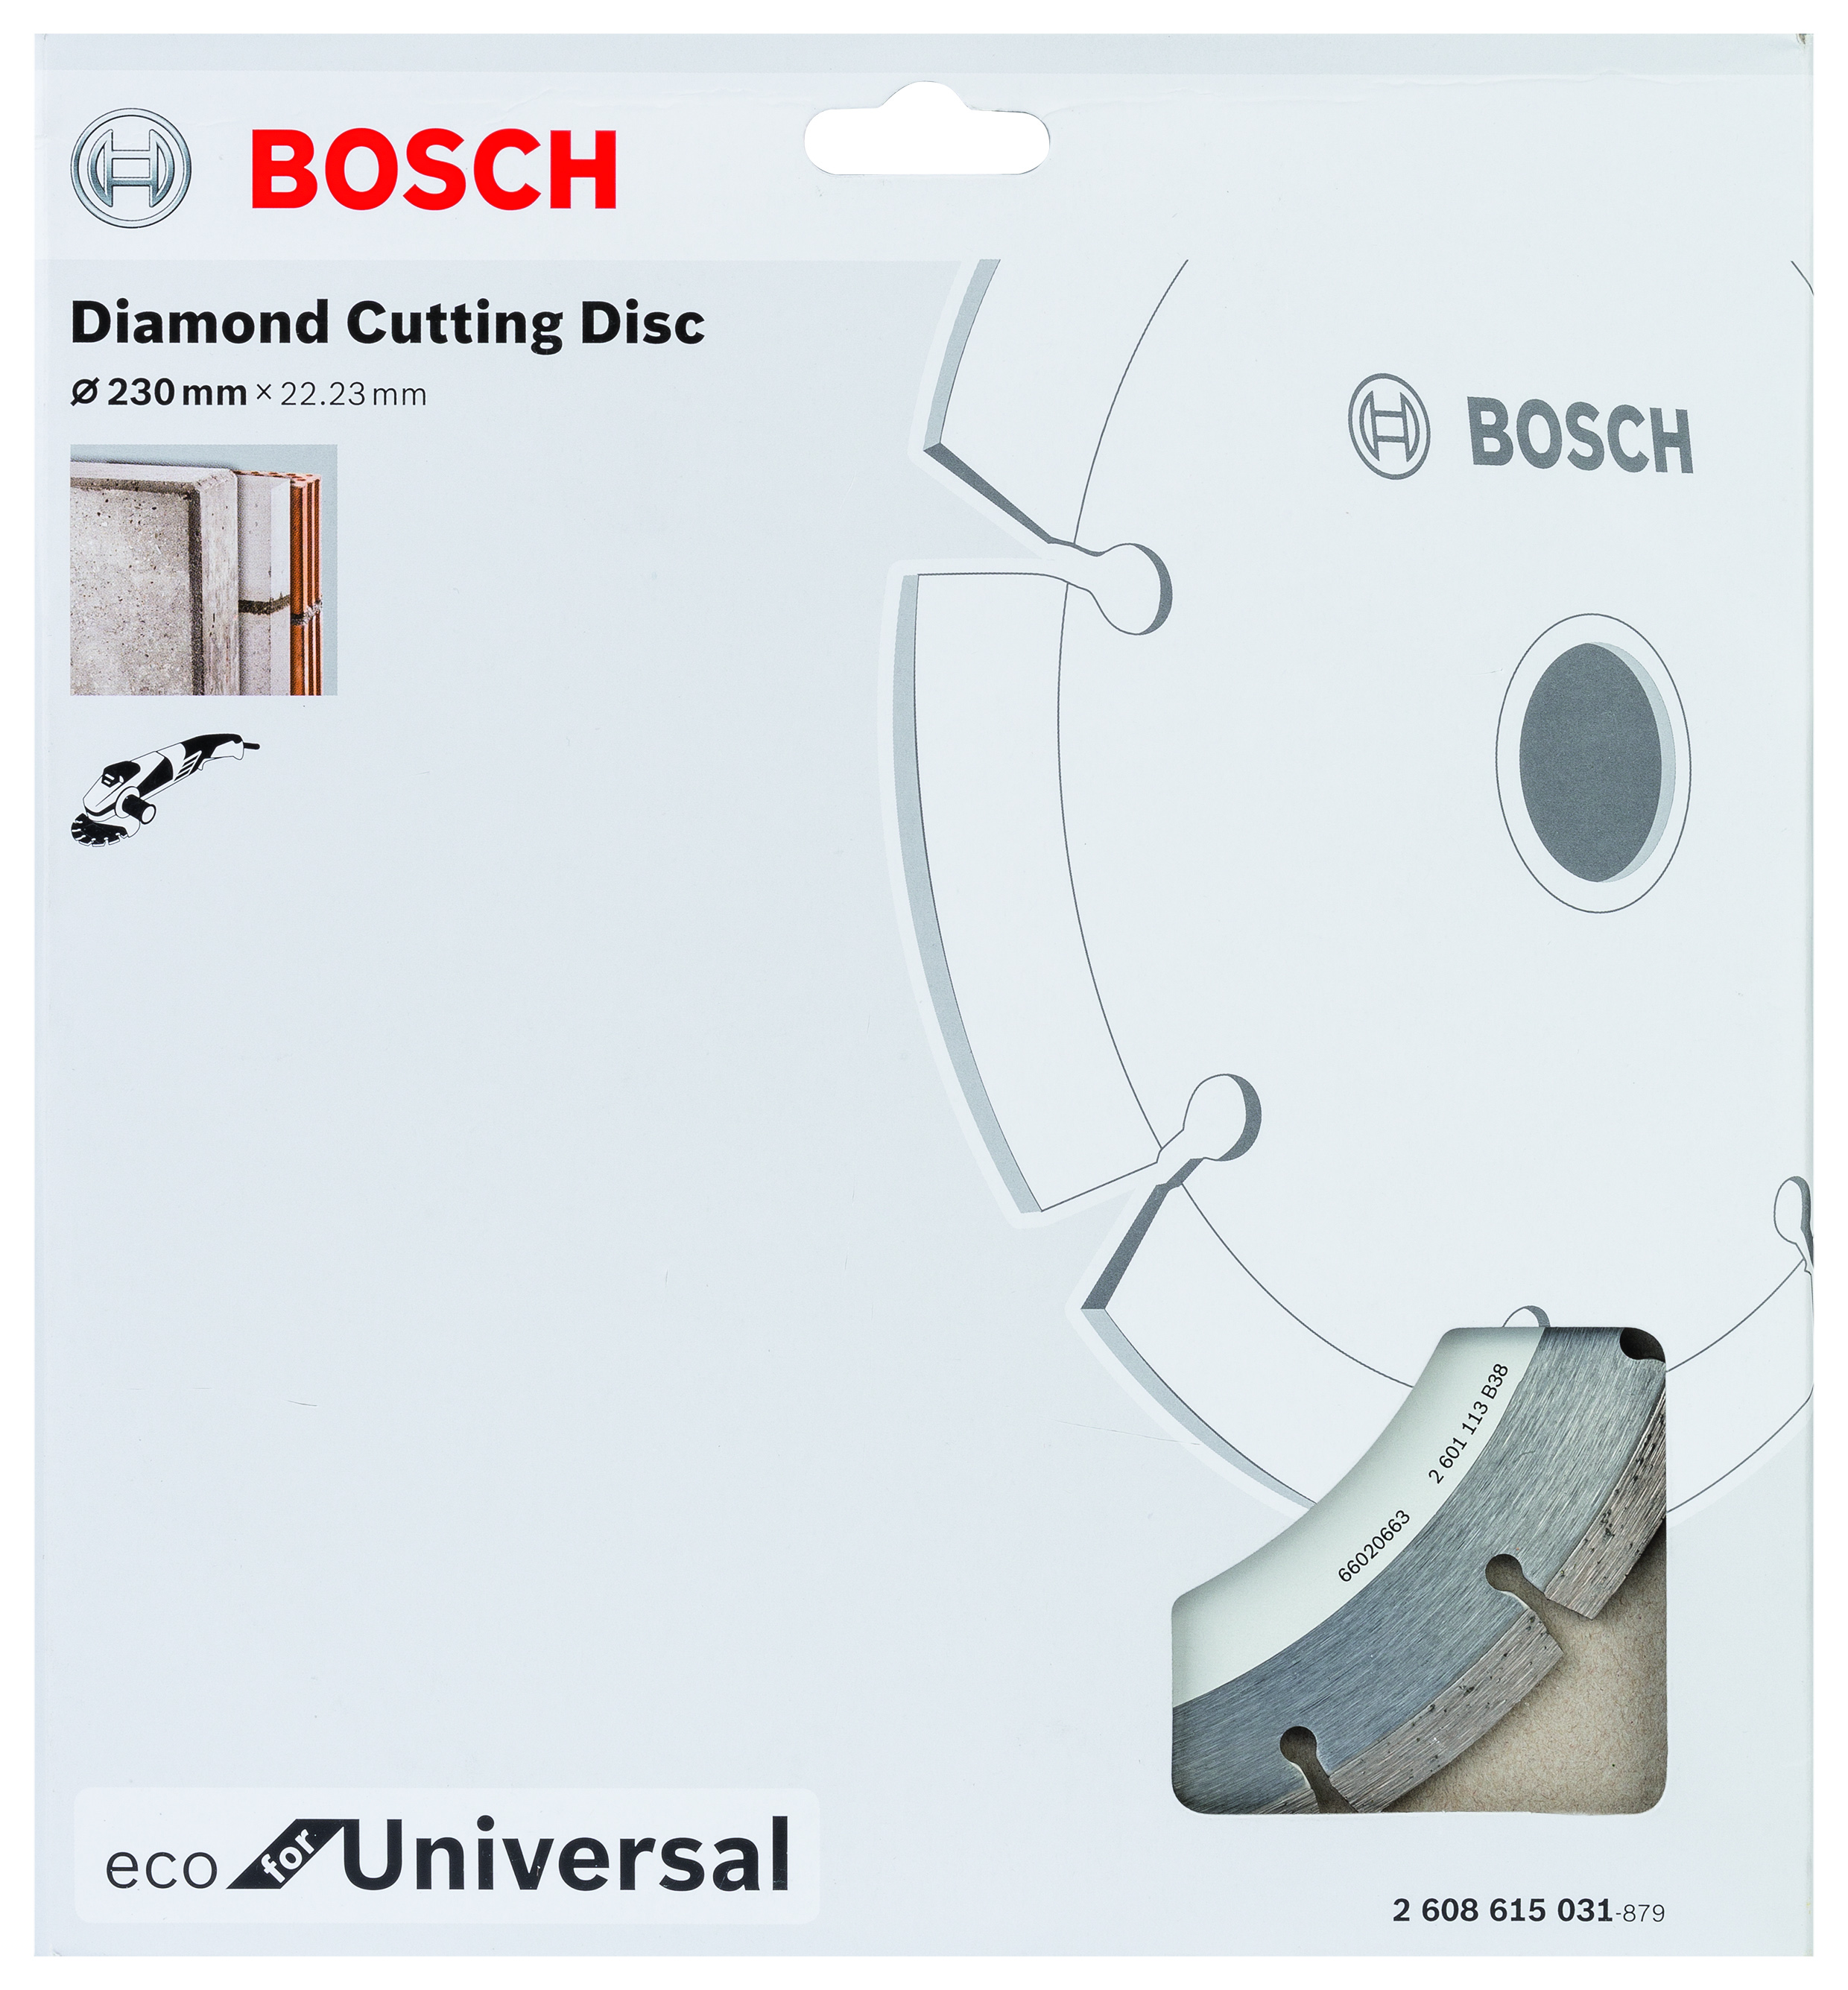 Bosch Diamond Cutting Disc ECO Universal